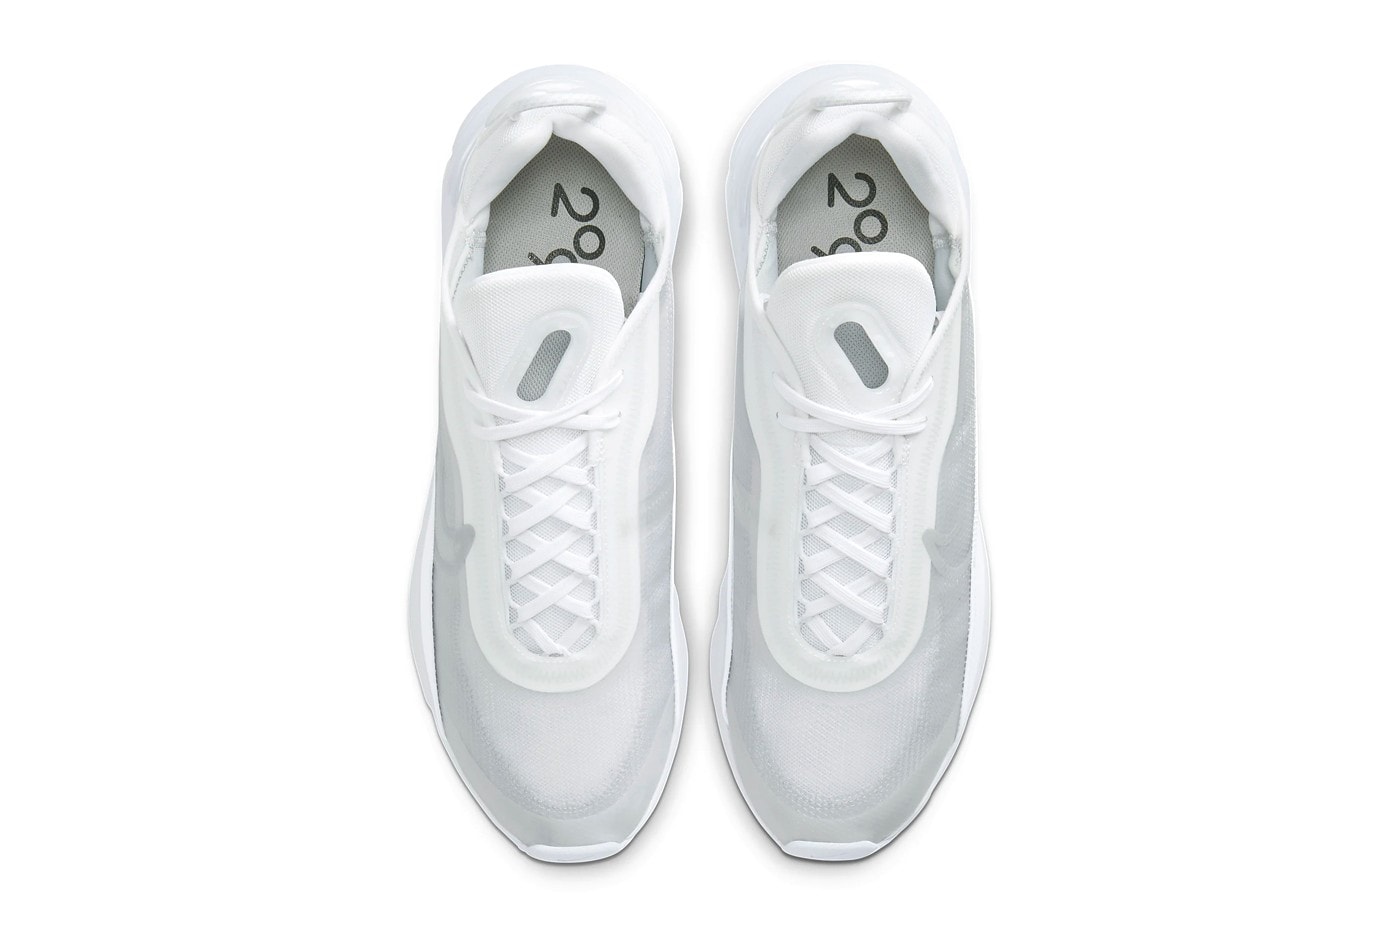 Nike Air Max 2090 最新配色「Pure Platinum/White」發佈